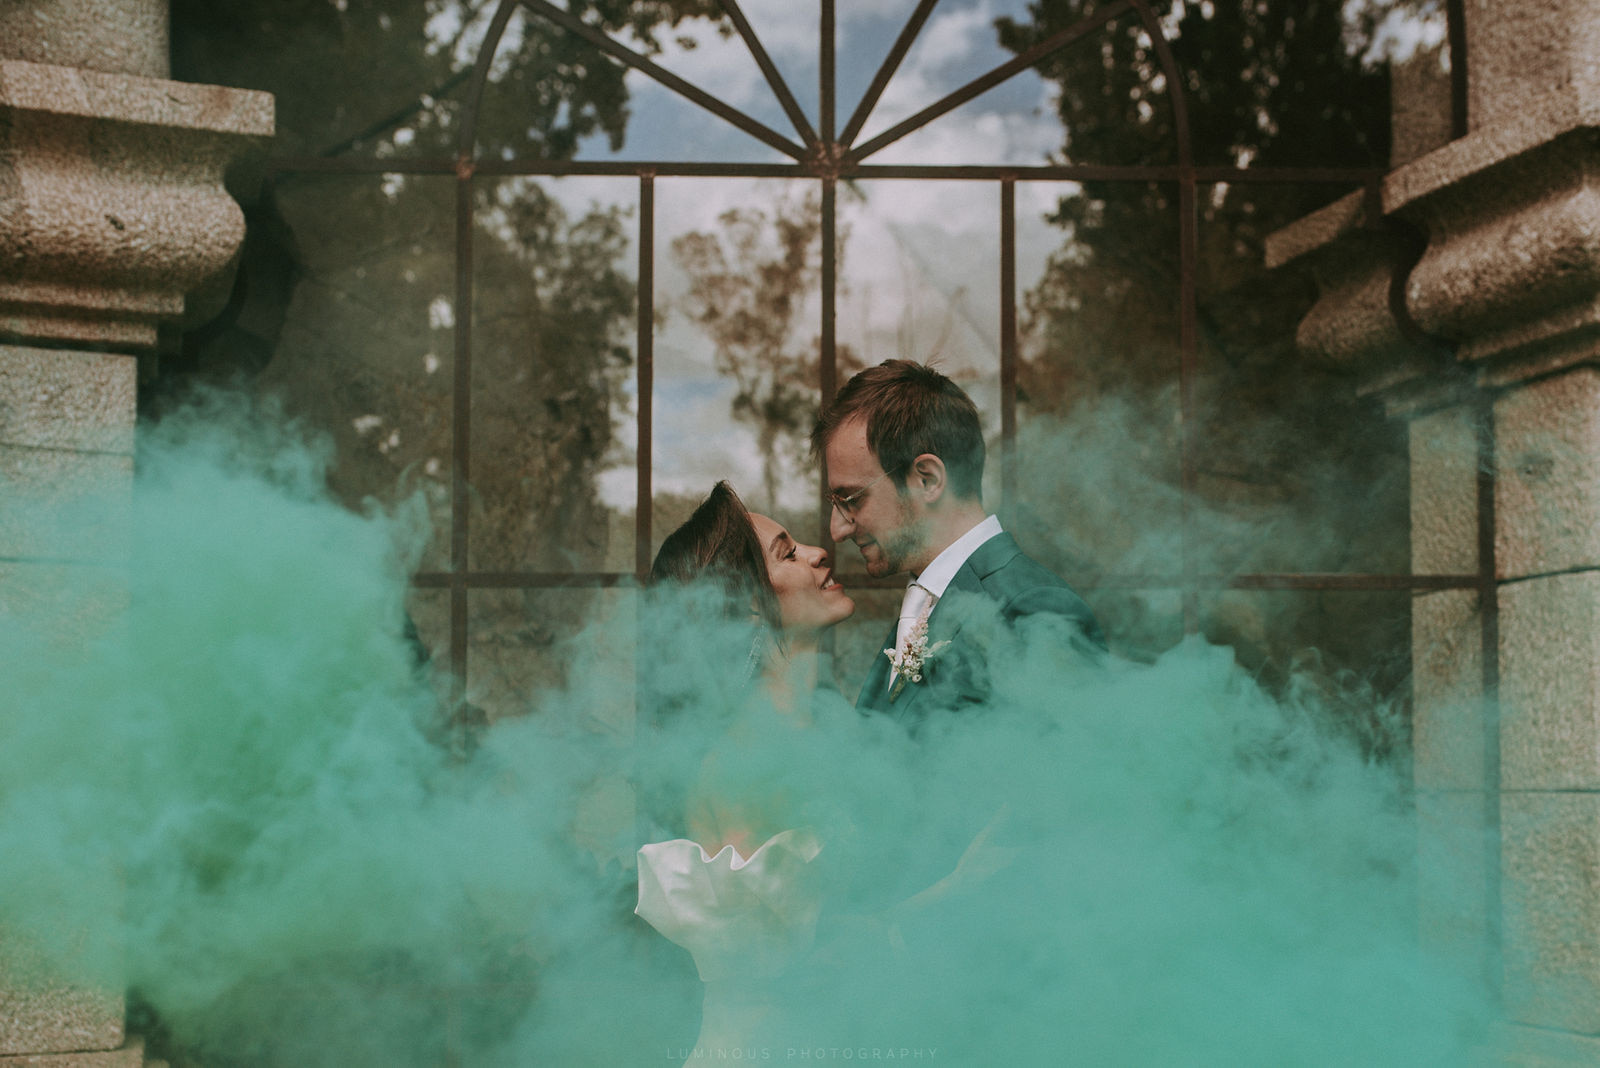 interracial couple kissing romantically with smoke bomb